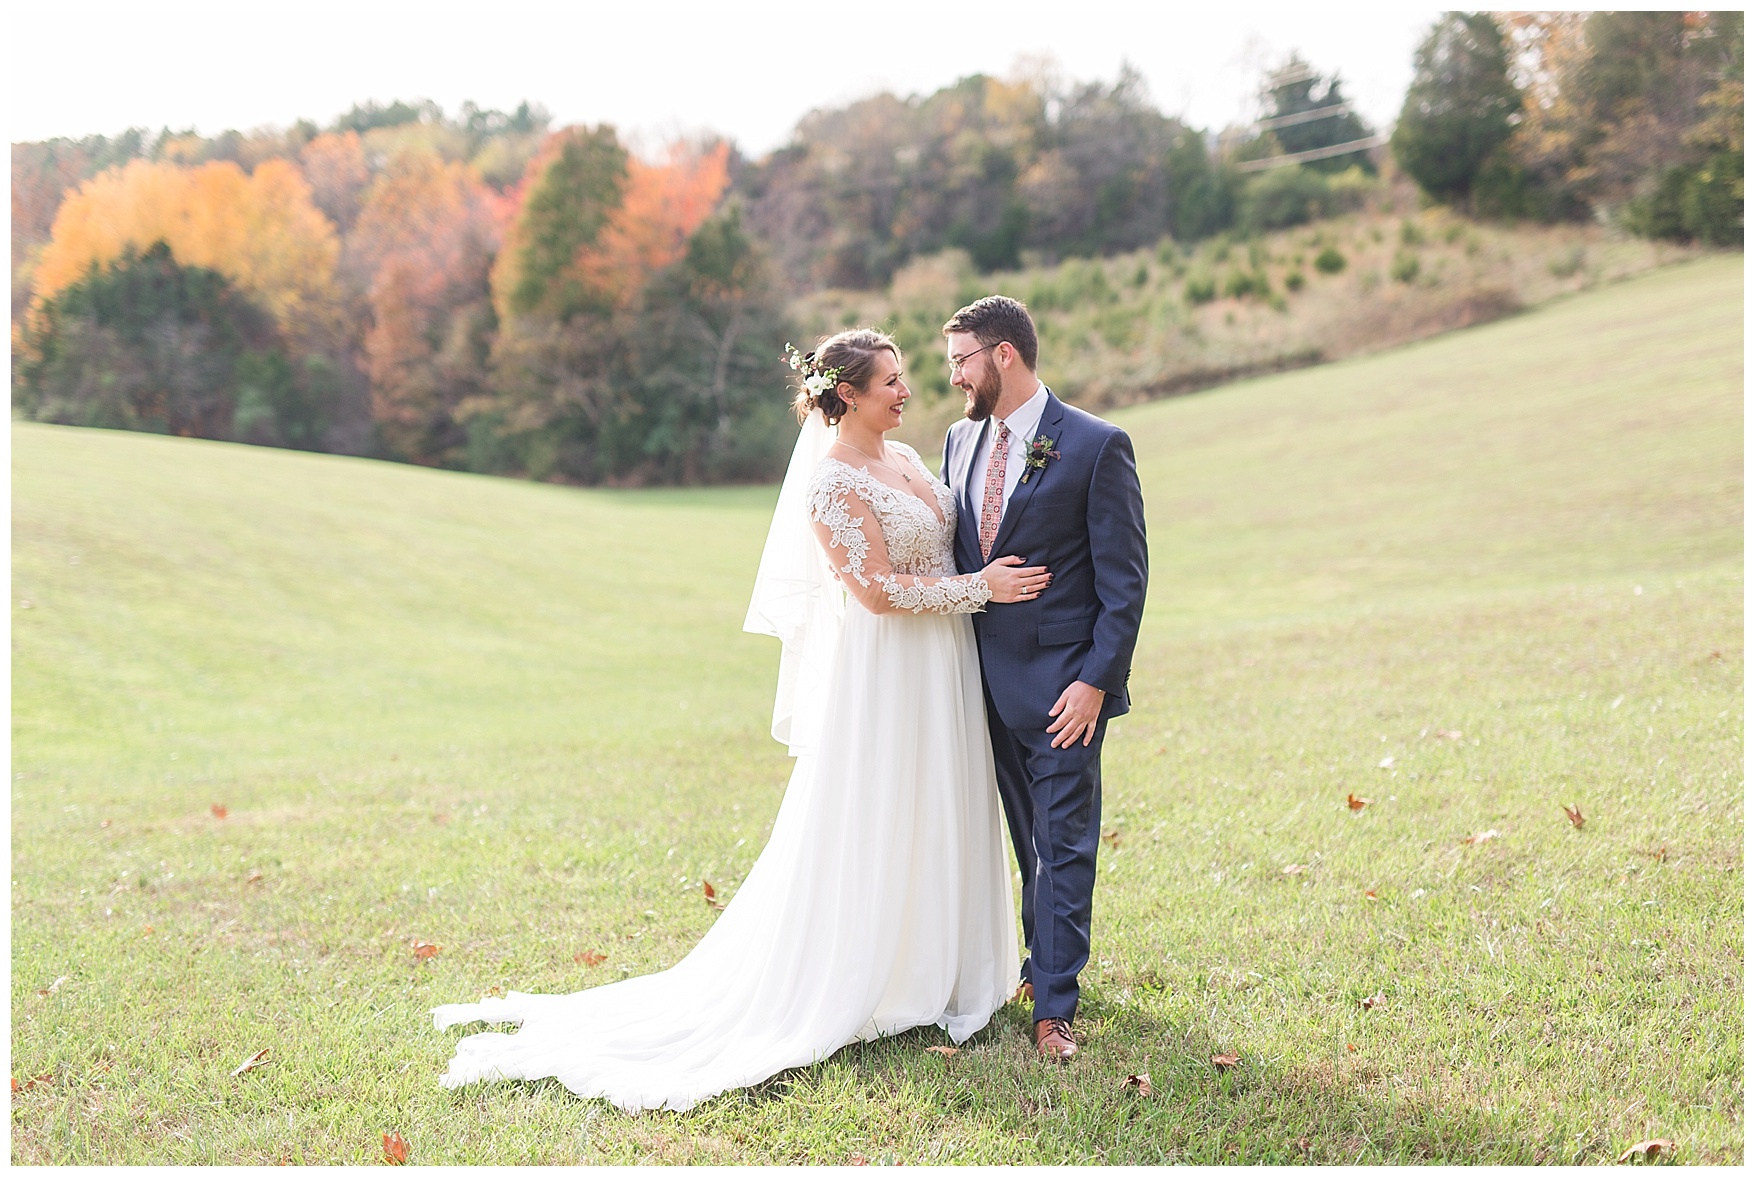 Lynchburg and Charlottesville Wedding Photographer || Fall Wedding at The Trivium Estate in Forest, Virginia || www.ashleyeiban.com